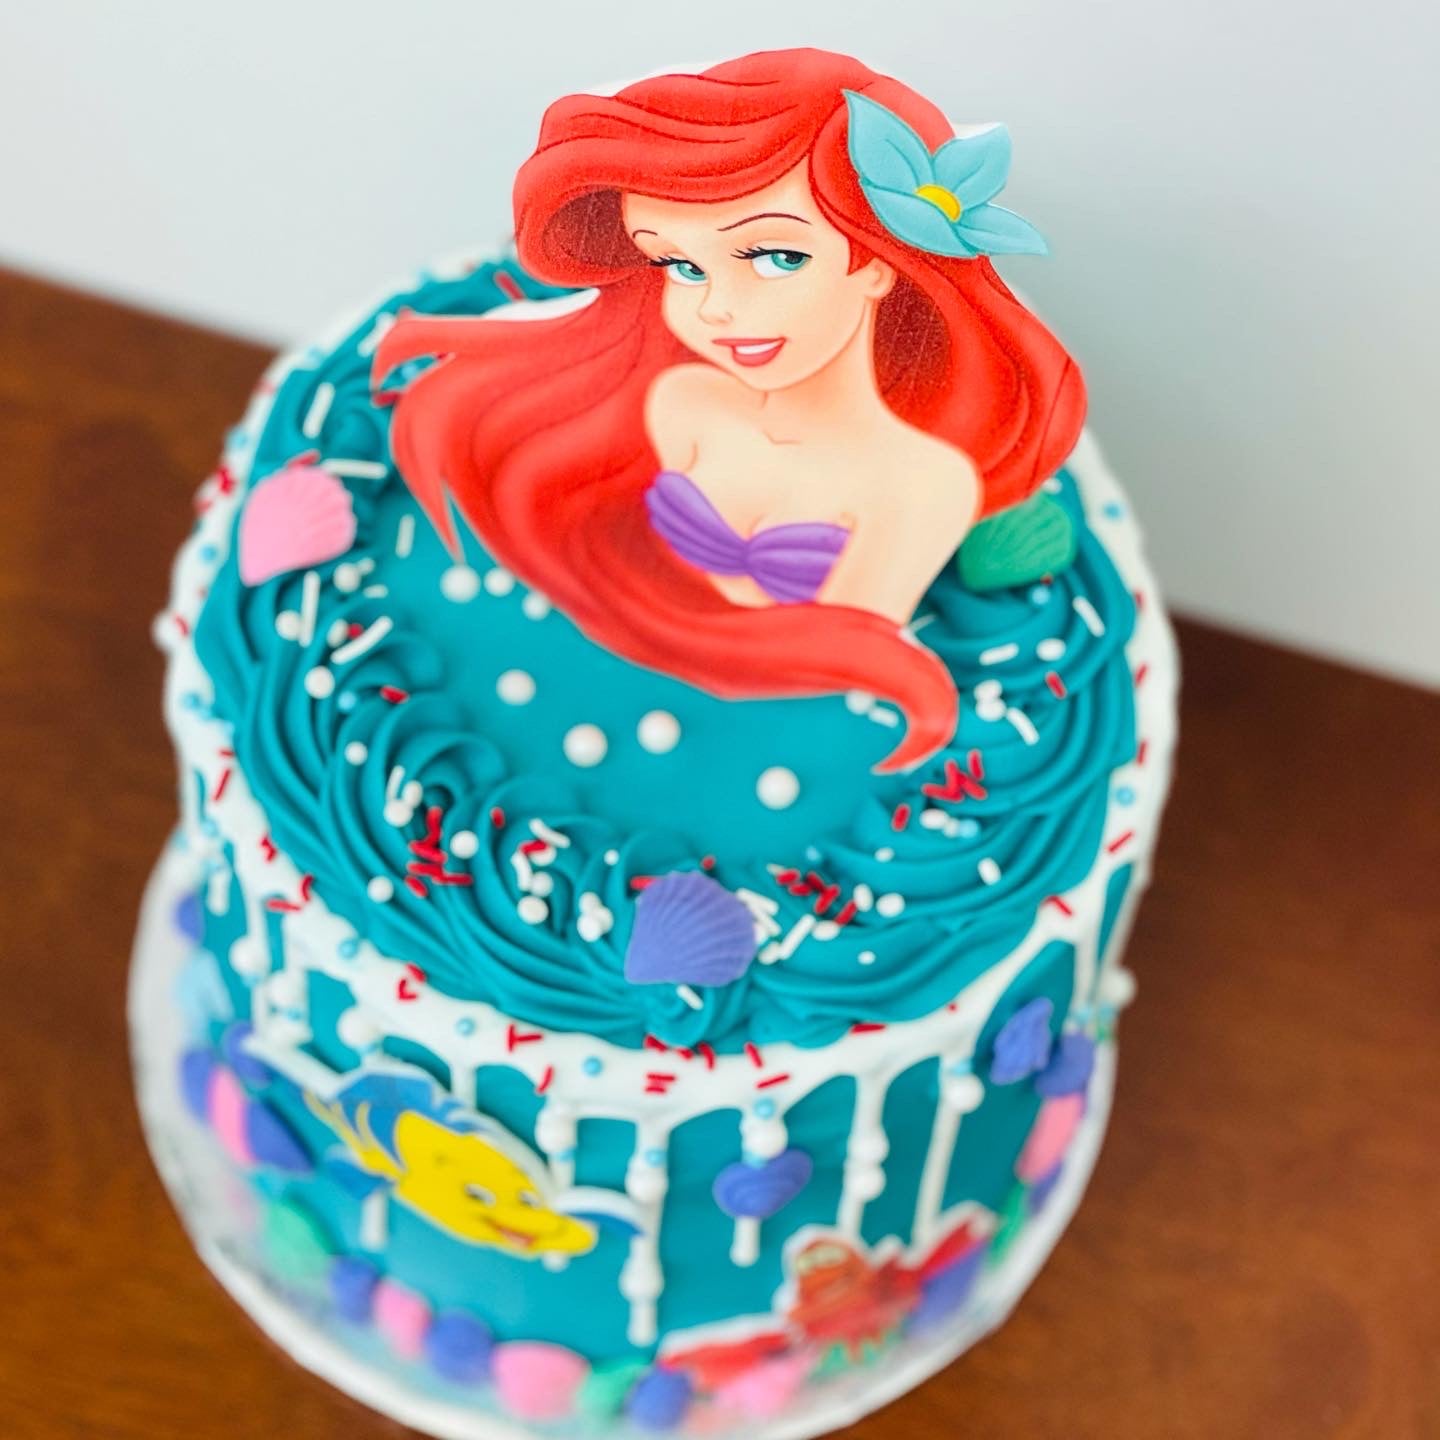 The Wedding Cake from The Little Mermaid | Disney Eats - YouTube